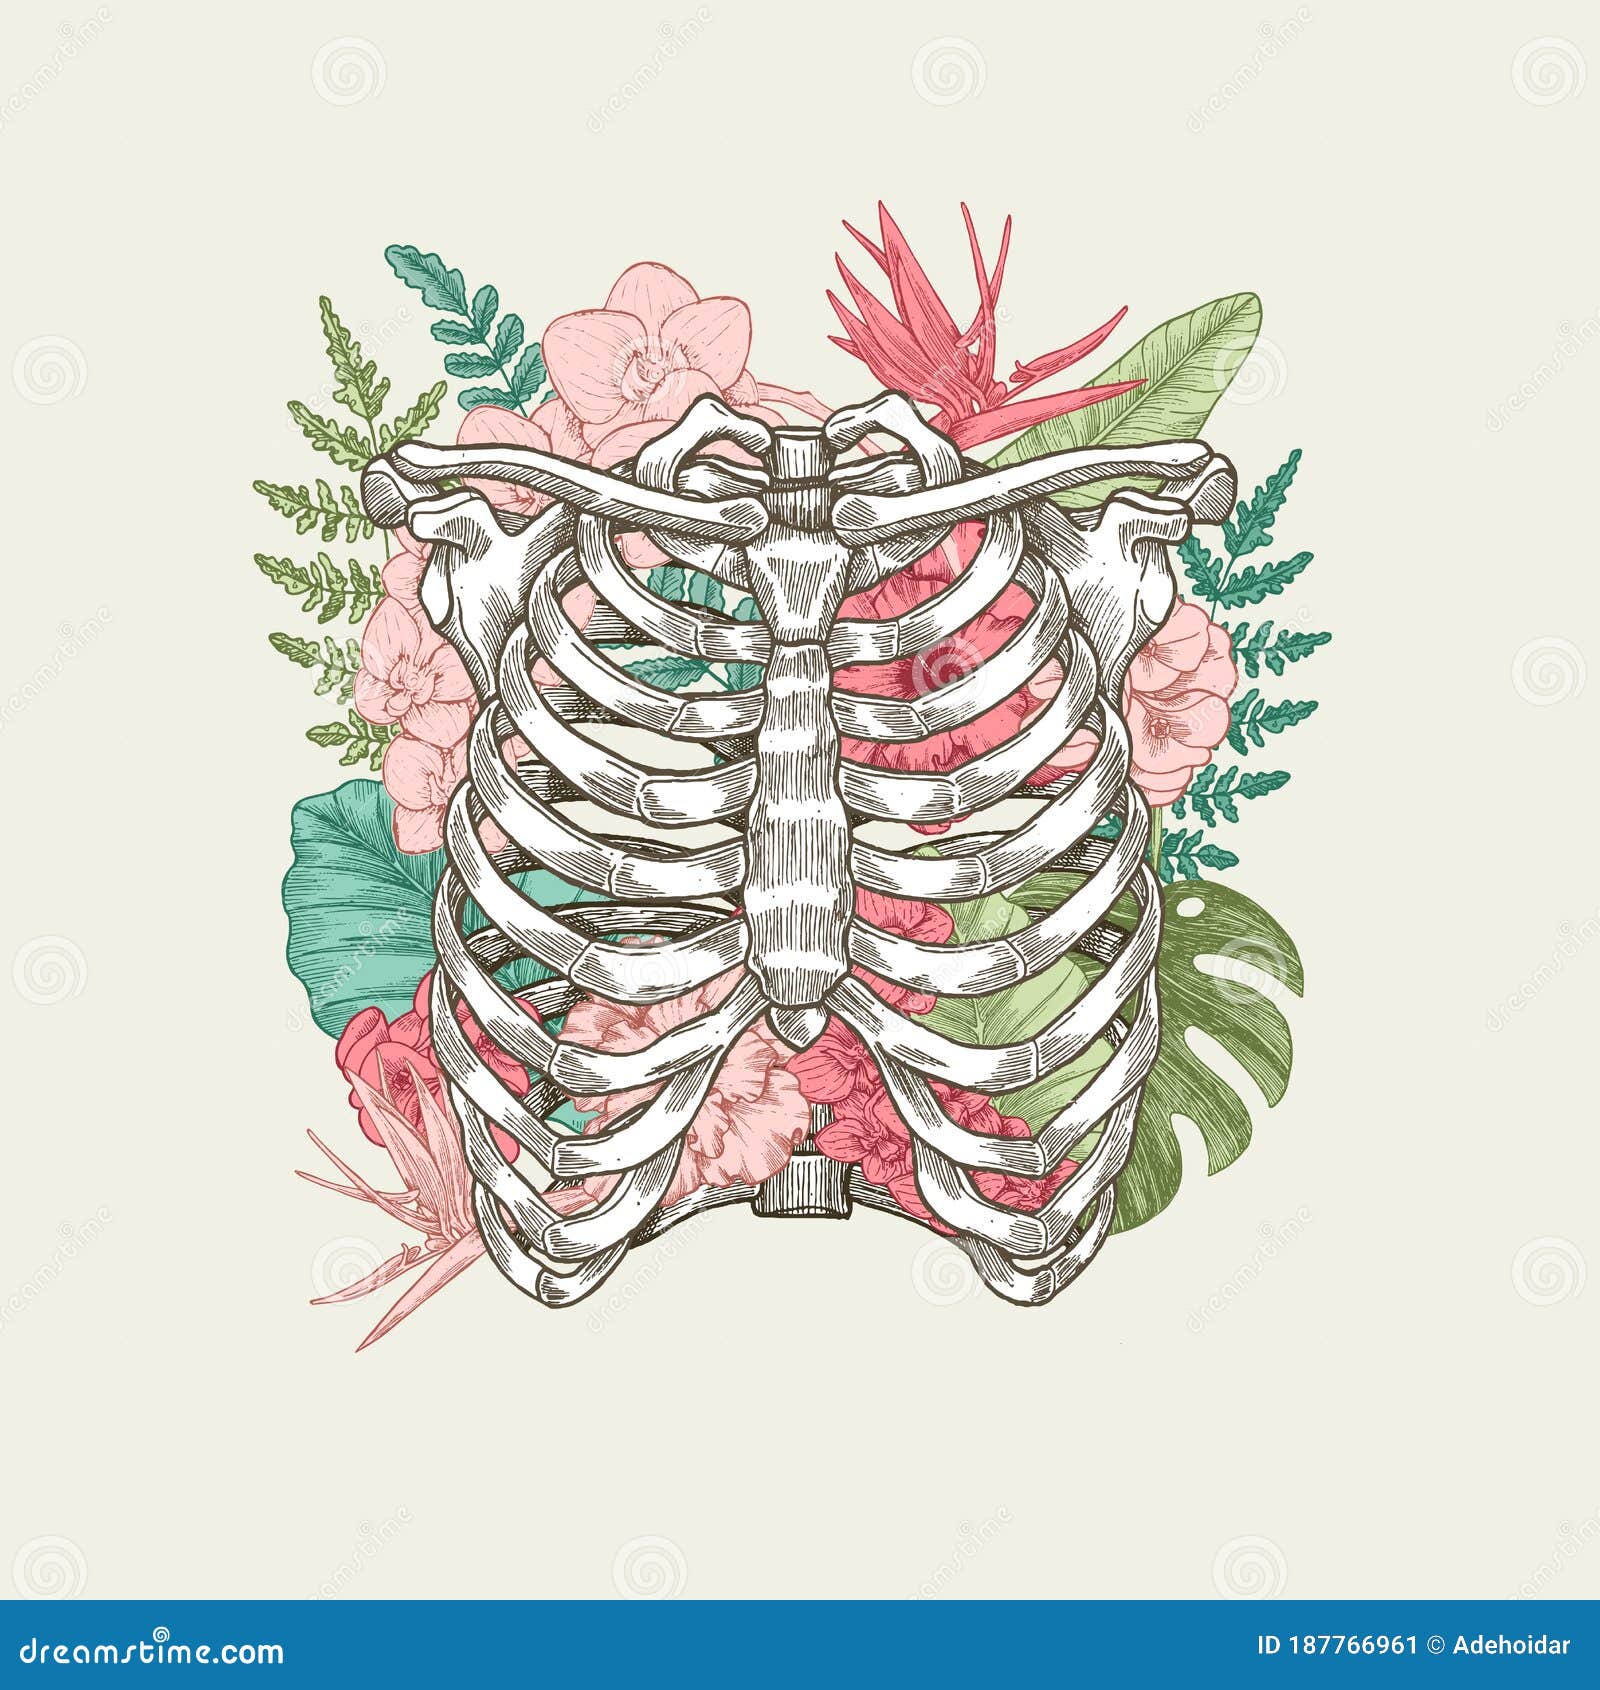 Exotic Florals Vintage Rib Cage Illustration Stock Vector Illustration Of Anatomical Background 187766961